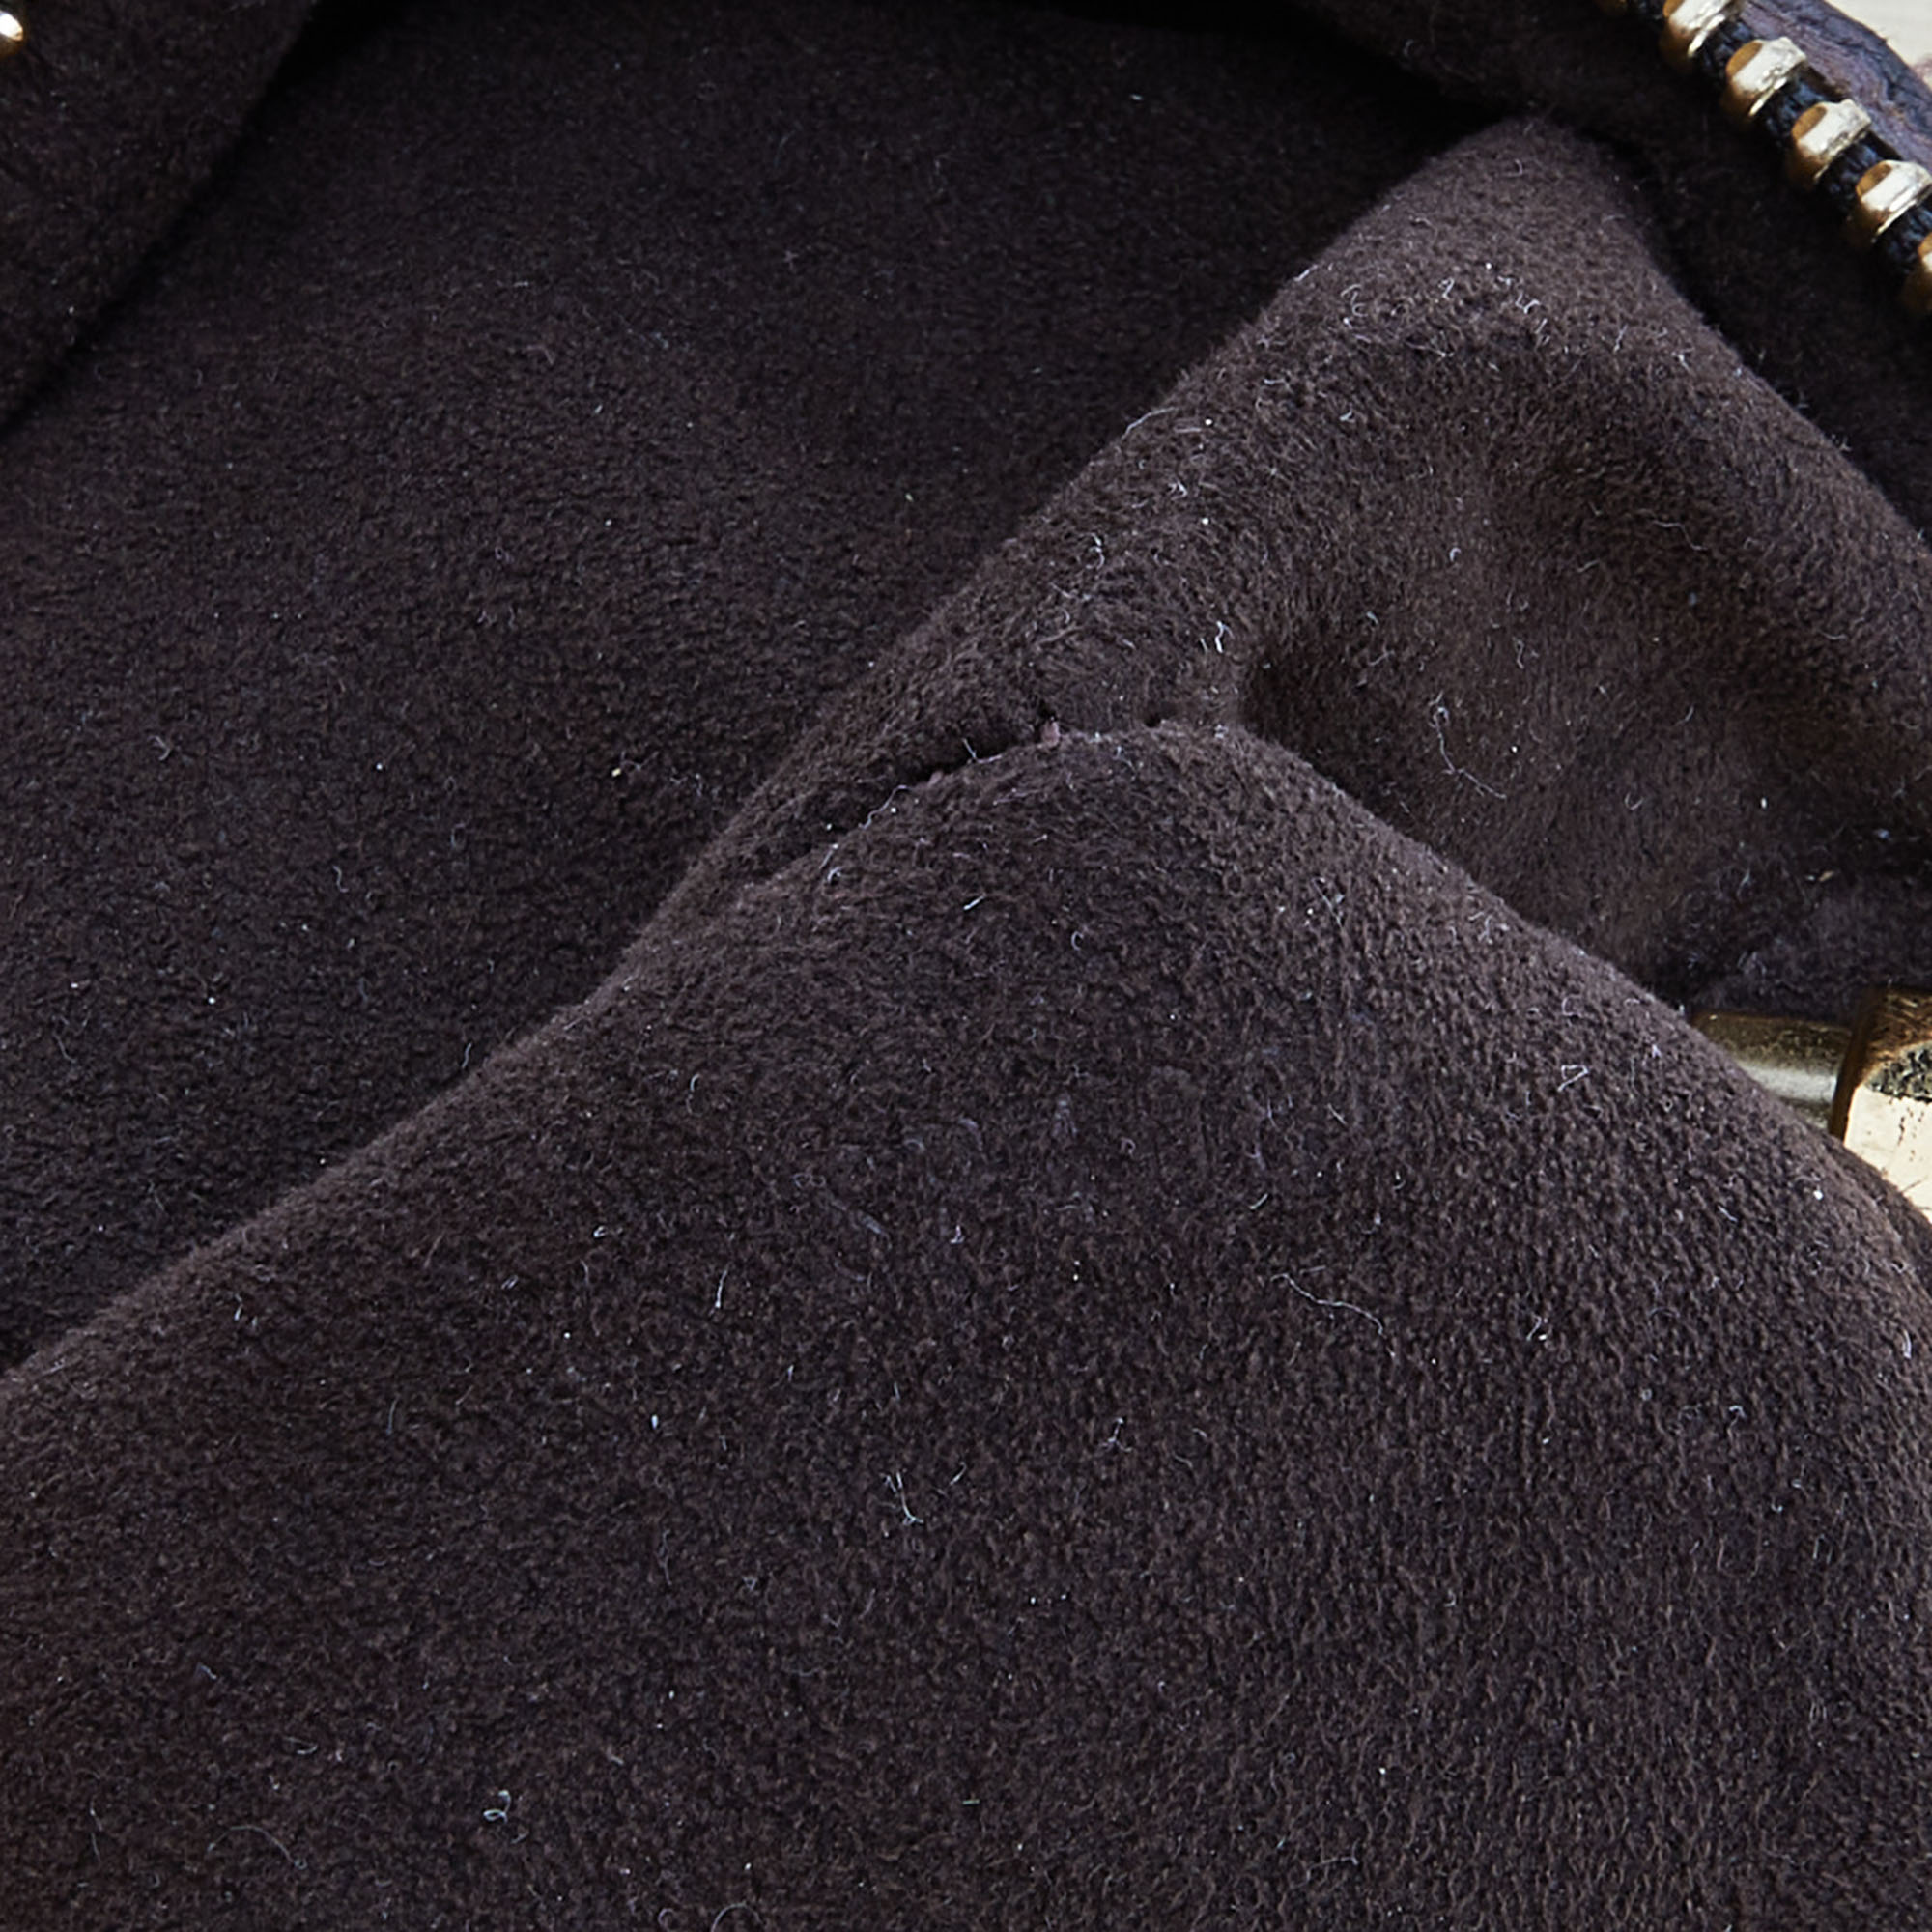 Louis Vuitton Black Monogram Mahina Leather L Bag